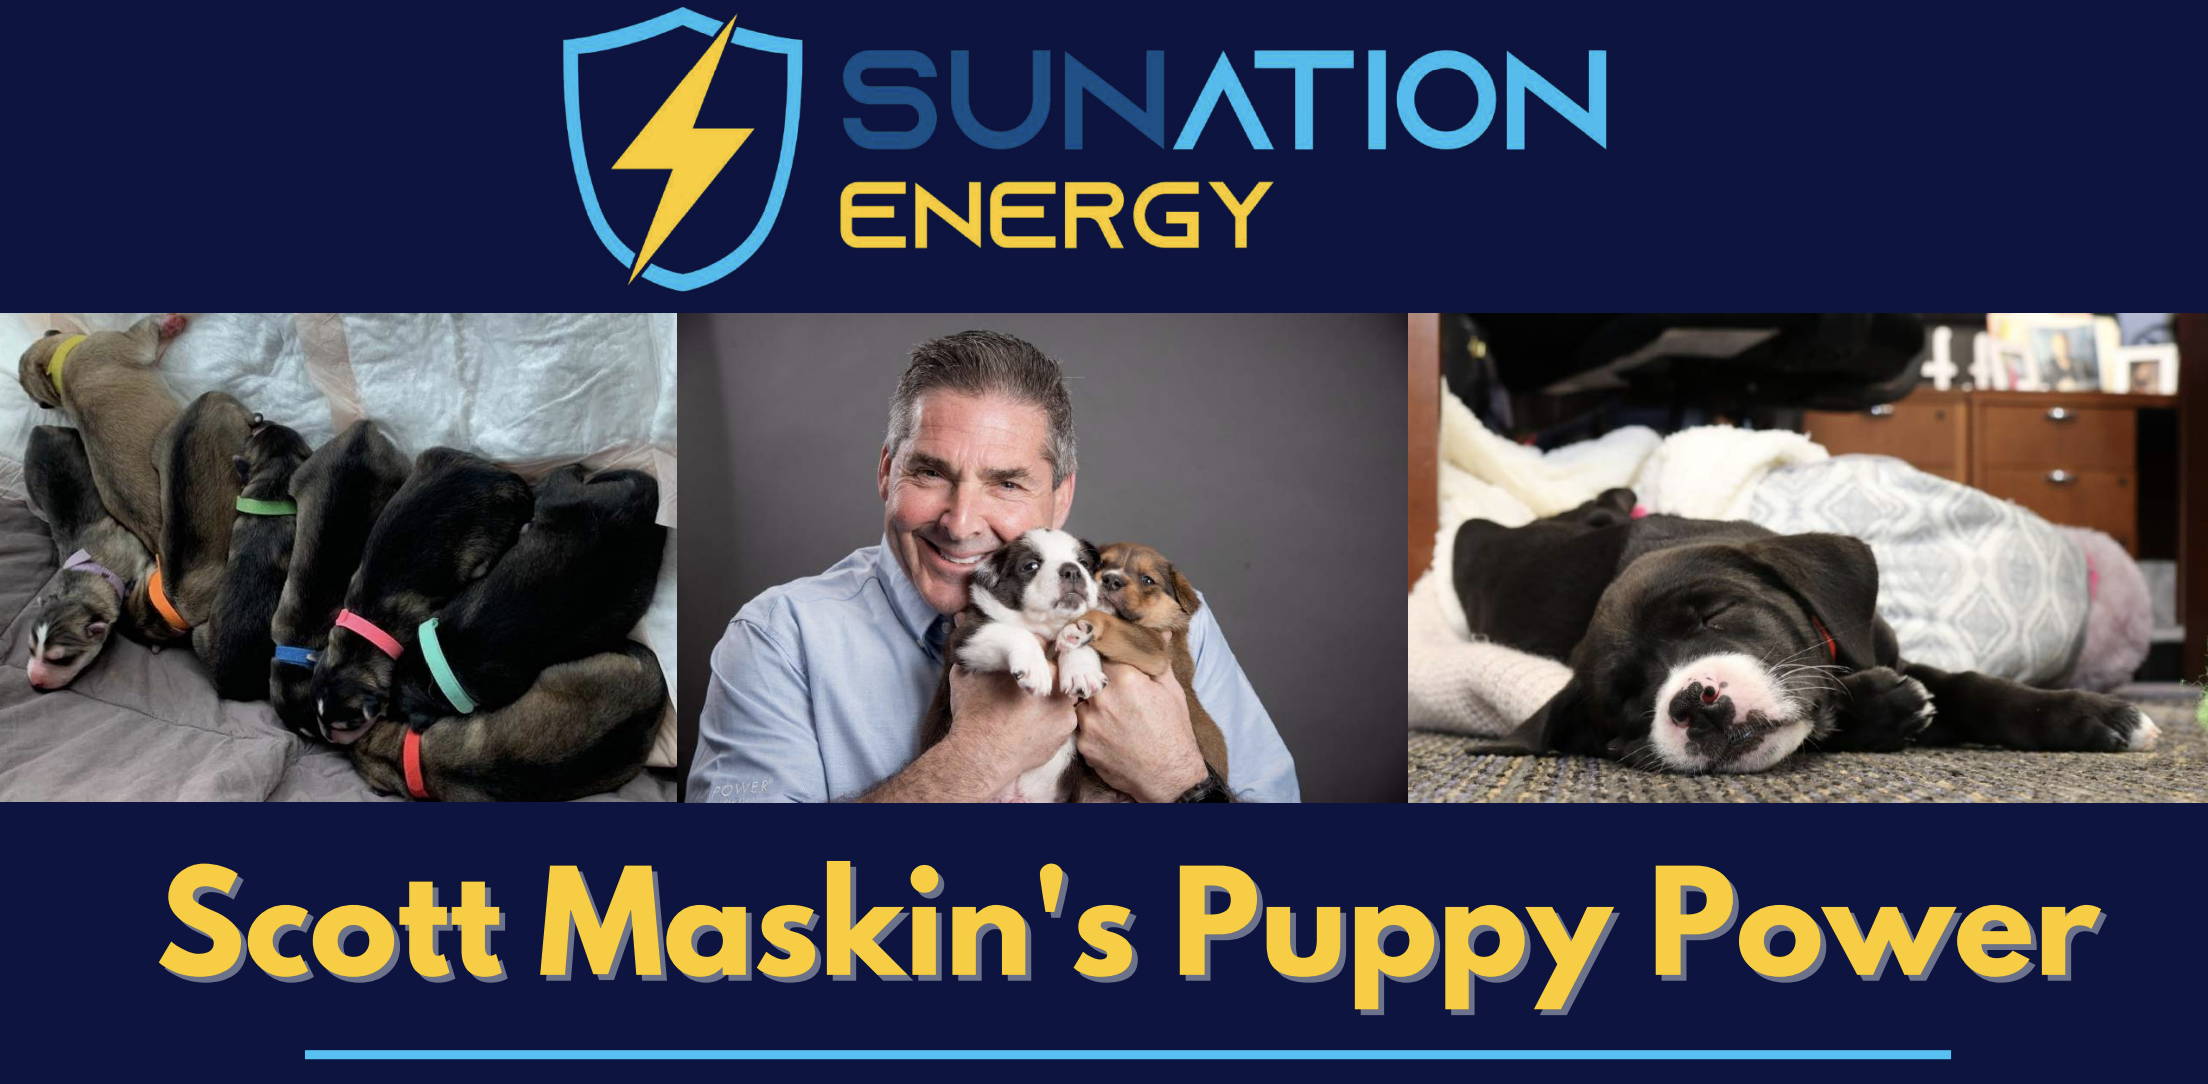 SUNation Energy Chief Fun Officer Scott Maskin